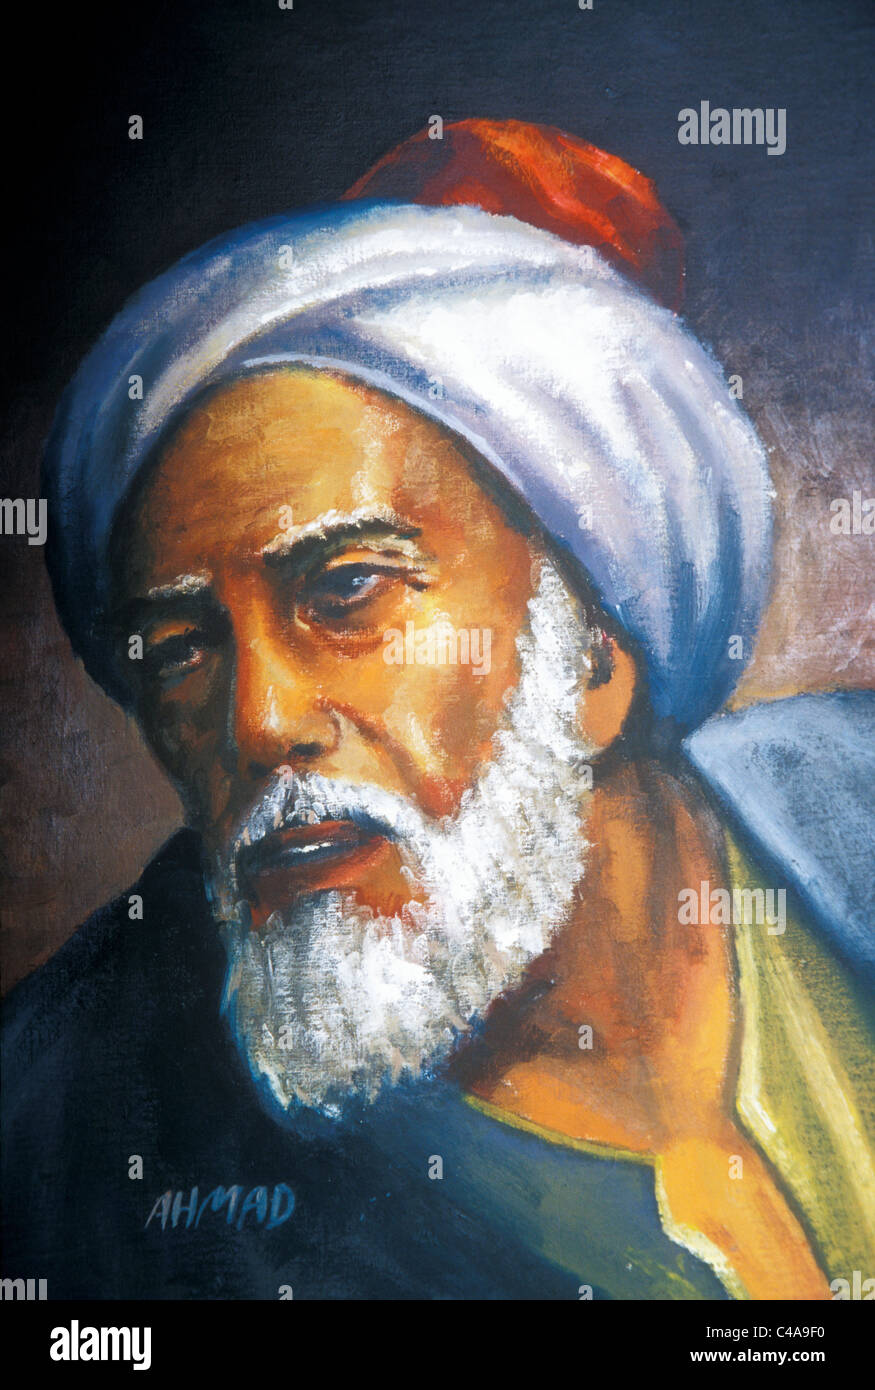 Abu <b>Abd Allah</b> Muhammad al-Idrisi al-Qurtubi al-Hasani al-Sabt - abu-abd-allah-muhammad-al-idrisi-al-qurtubi-al-hasani-al-sabt-known-C4A9F0